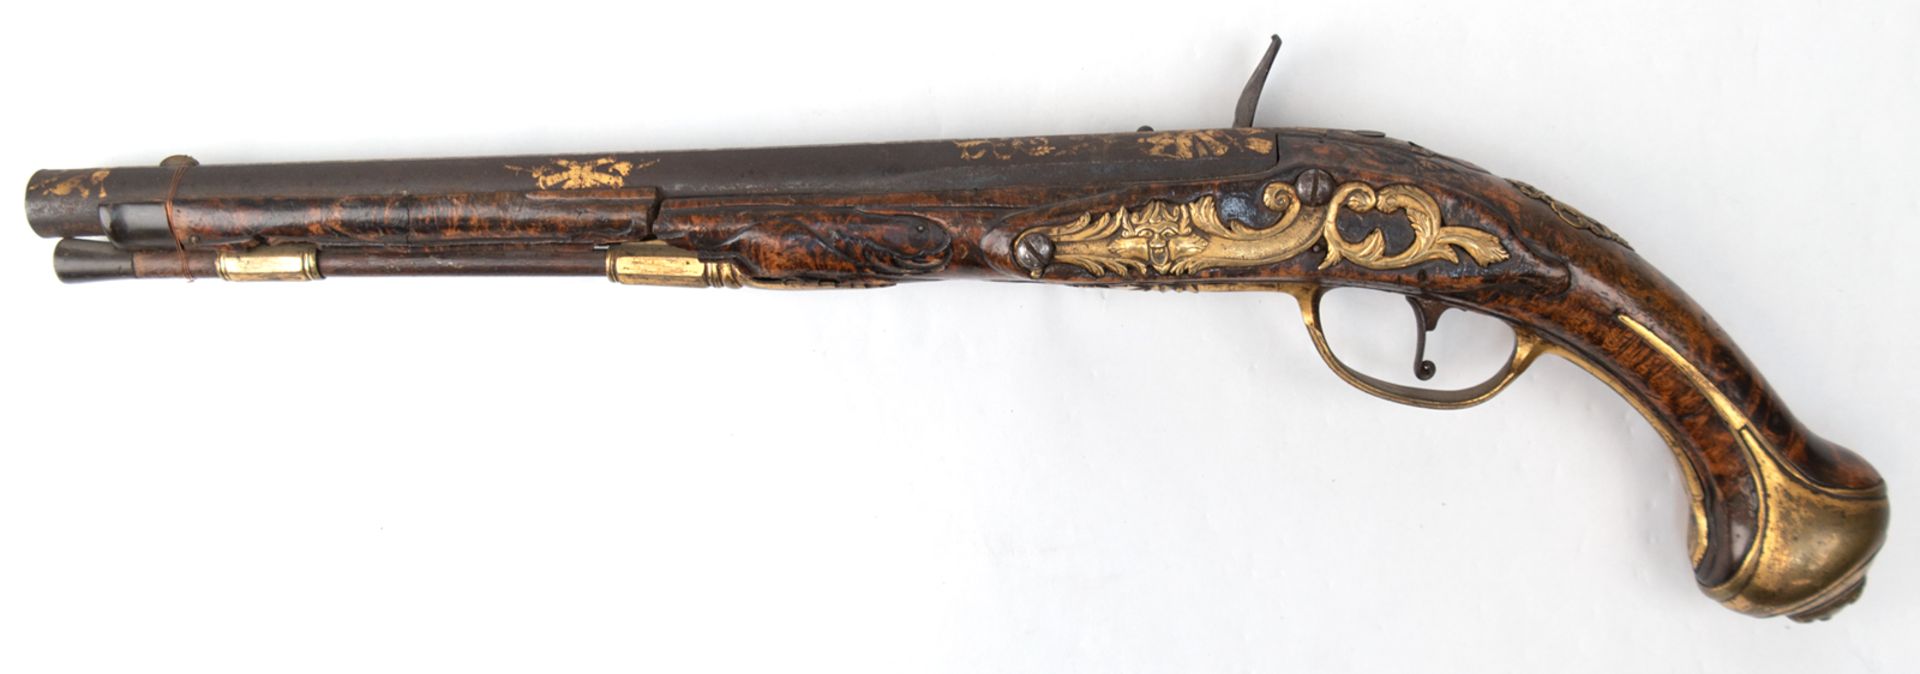 Steinschloßpistole, 18. Jh., nicht funktionstüchtig, Schloß defekt, starke Gebrauchspuren, L. 53 cm - Image 2 of 2